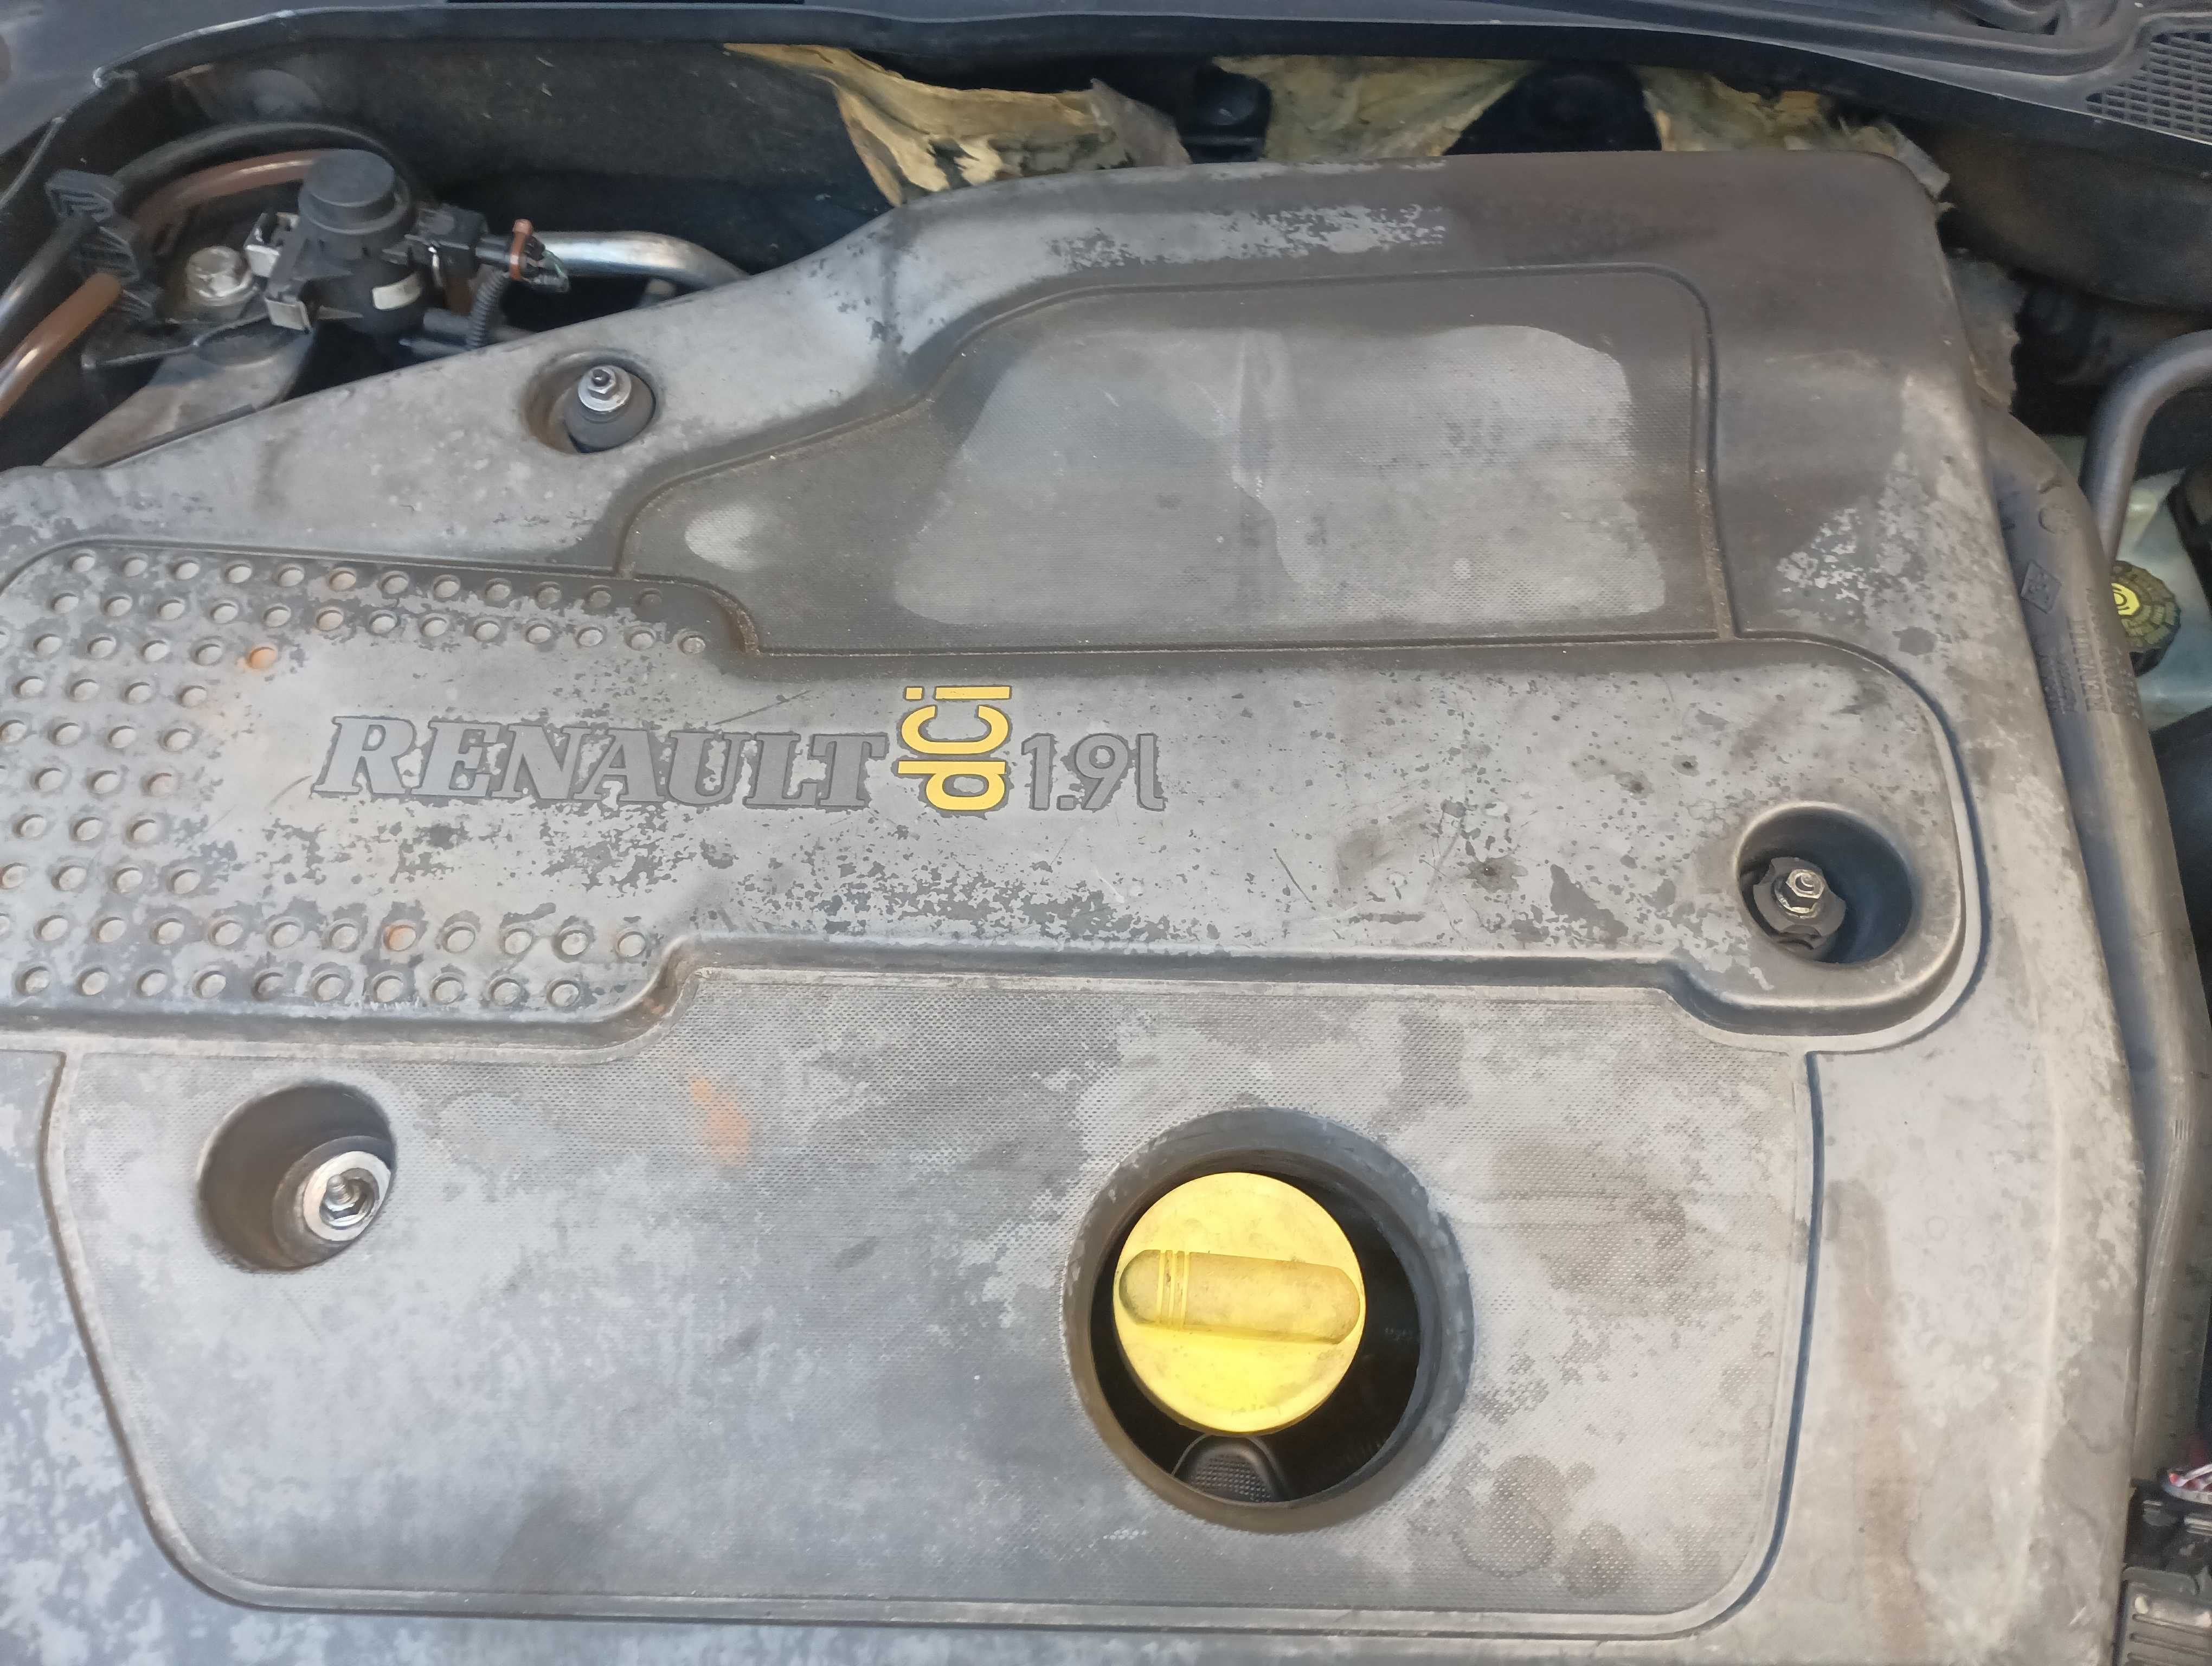 Renault   laguna Break  Carrinha Ano 03 diesel  completo de tudo